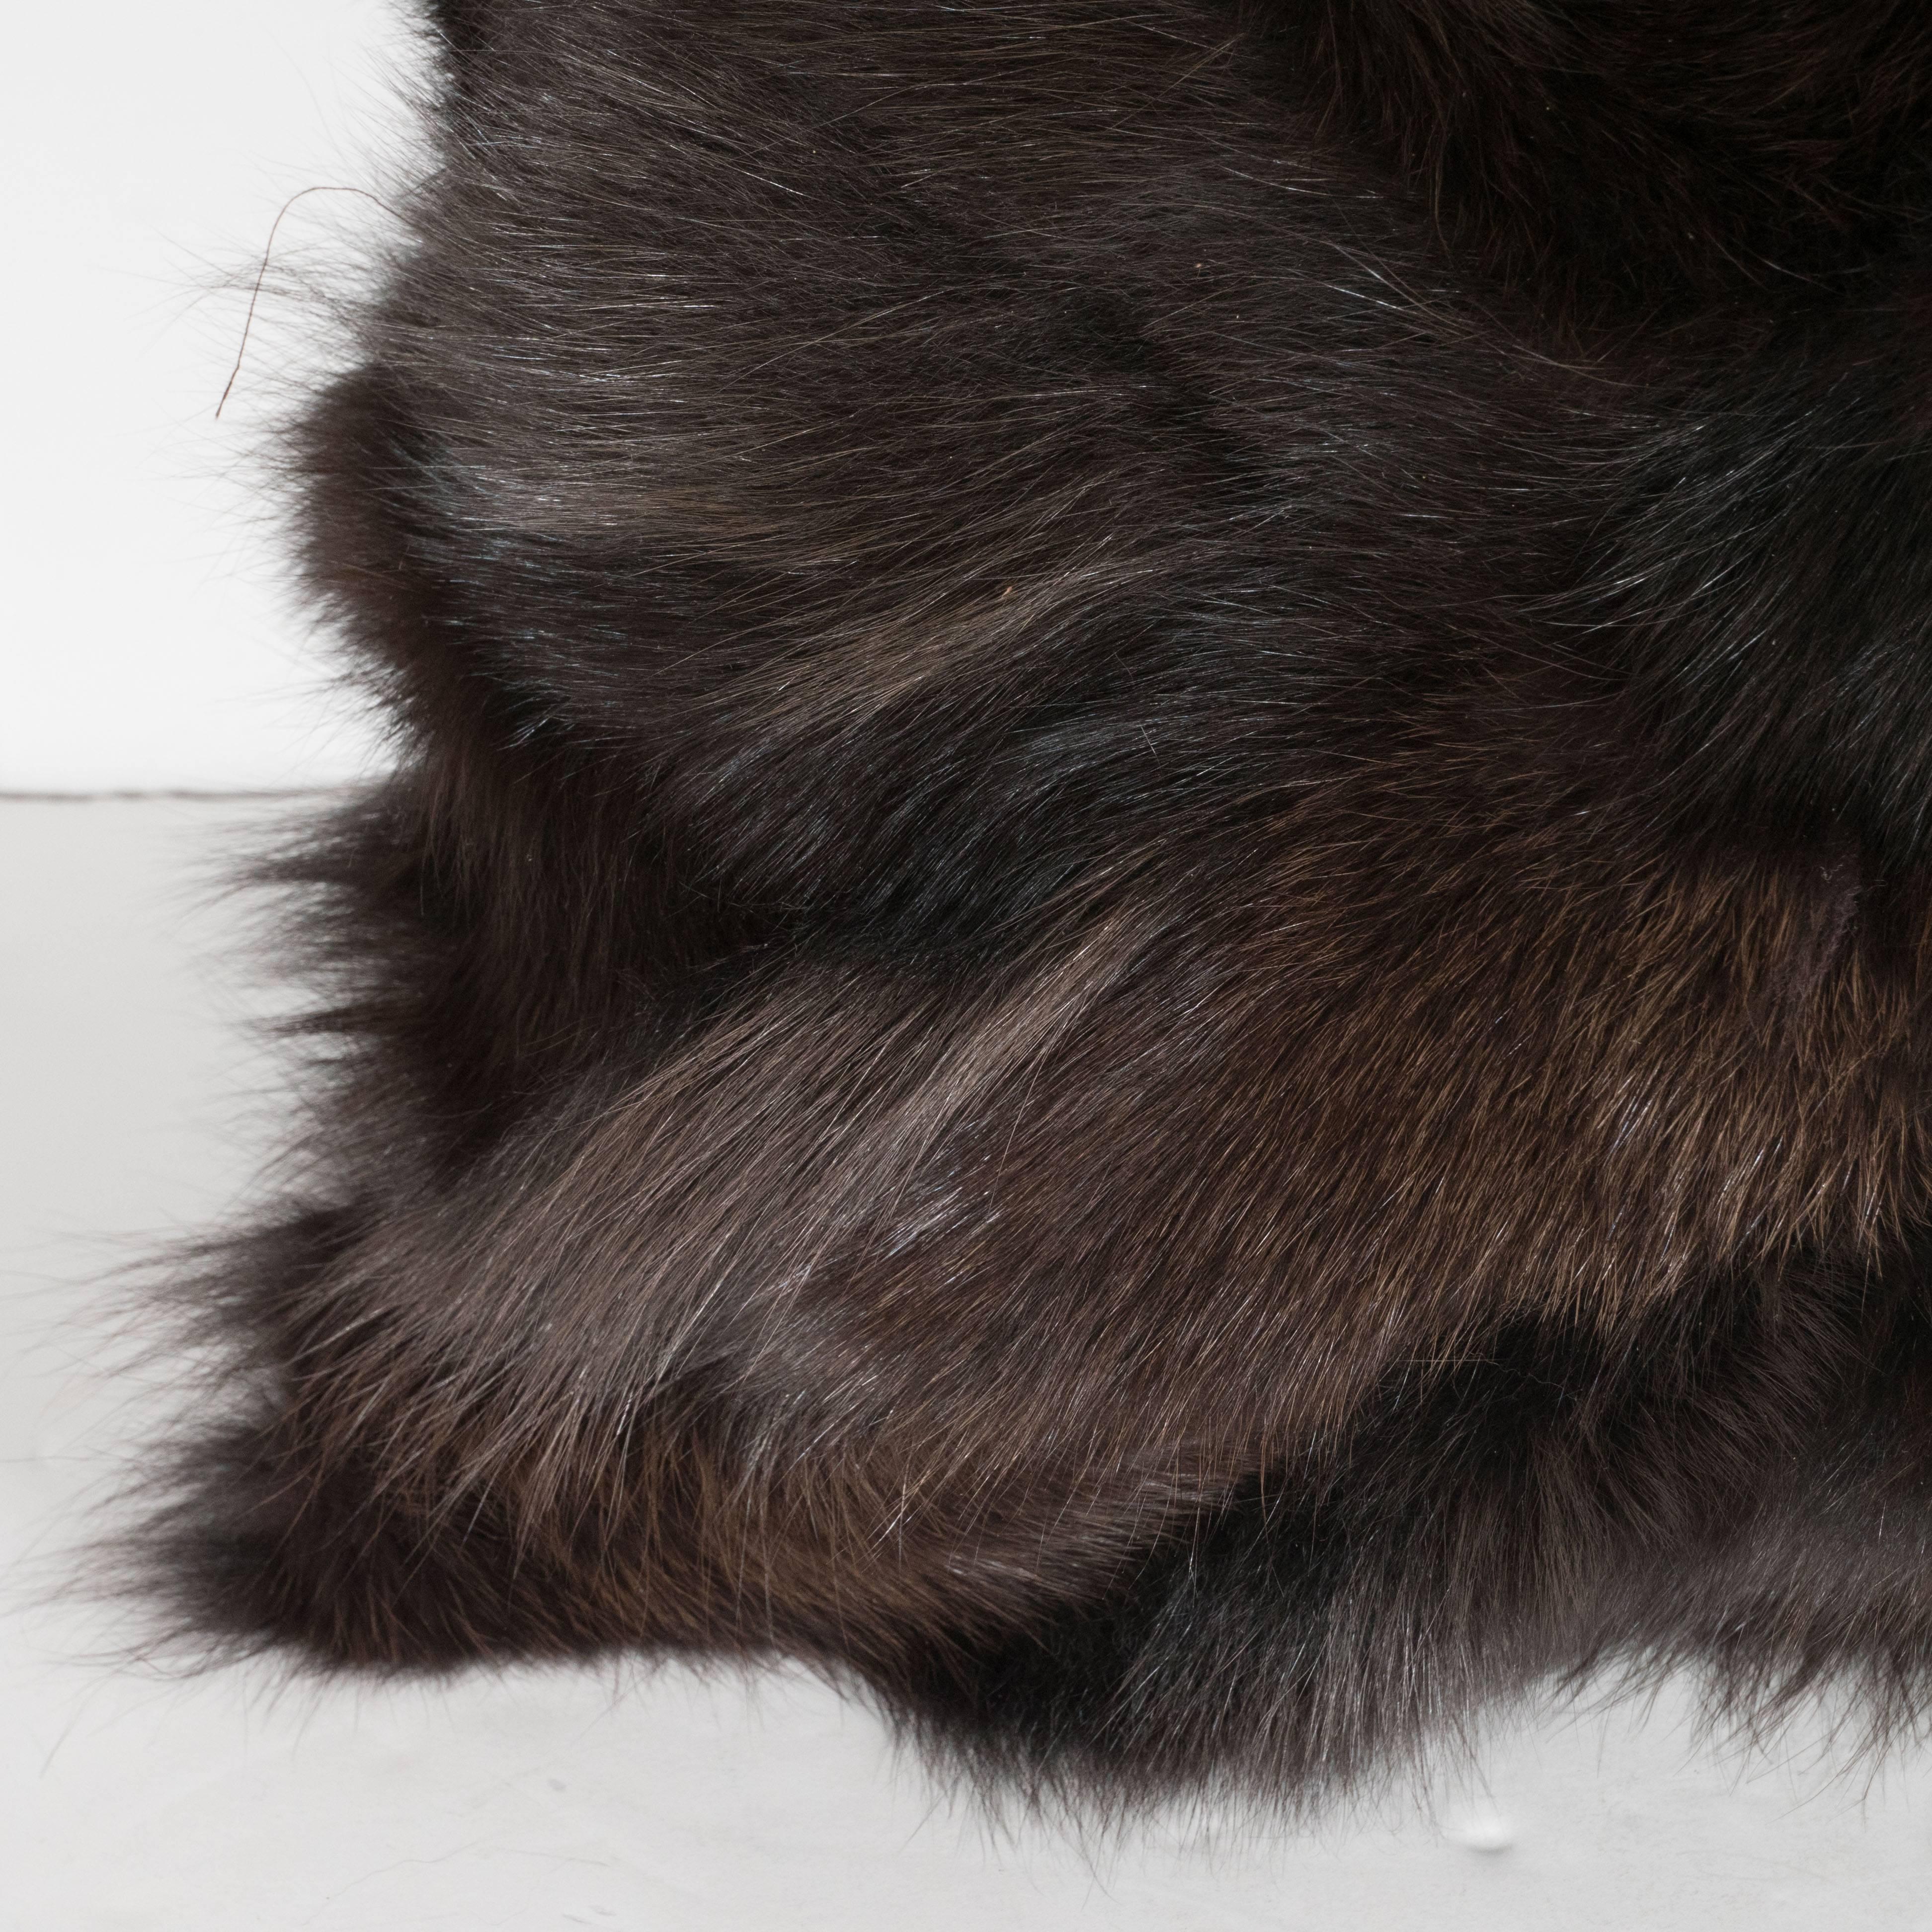 Contemporary Luxurious Custom New Handmade Fox Fur Pillows in a Stunning Onyx Shade For Sale